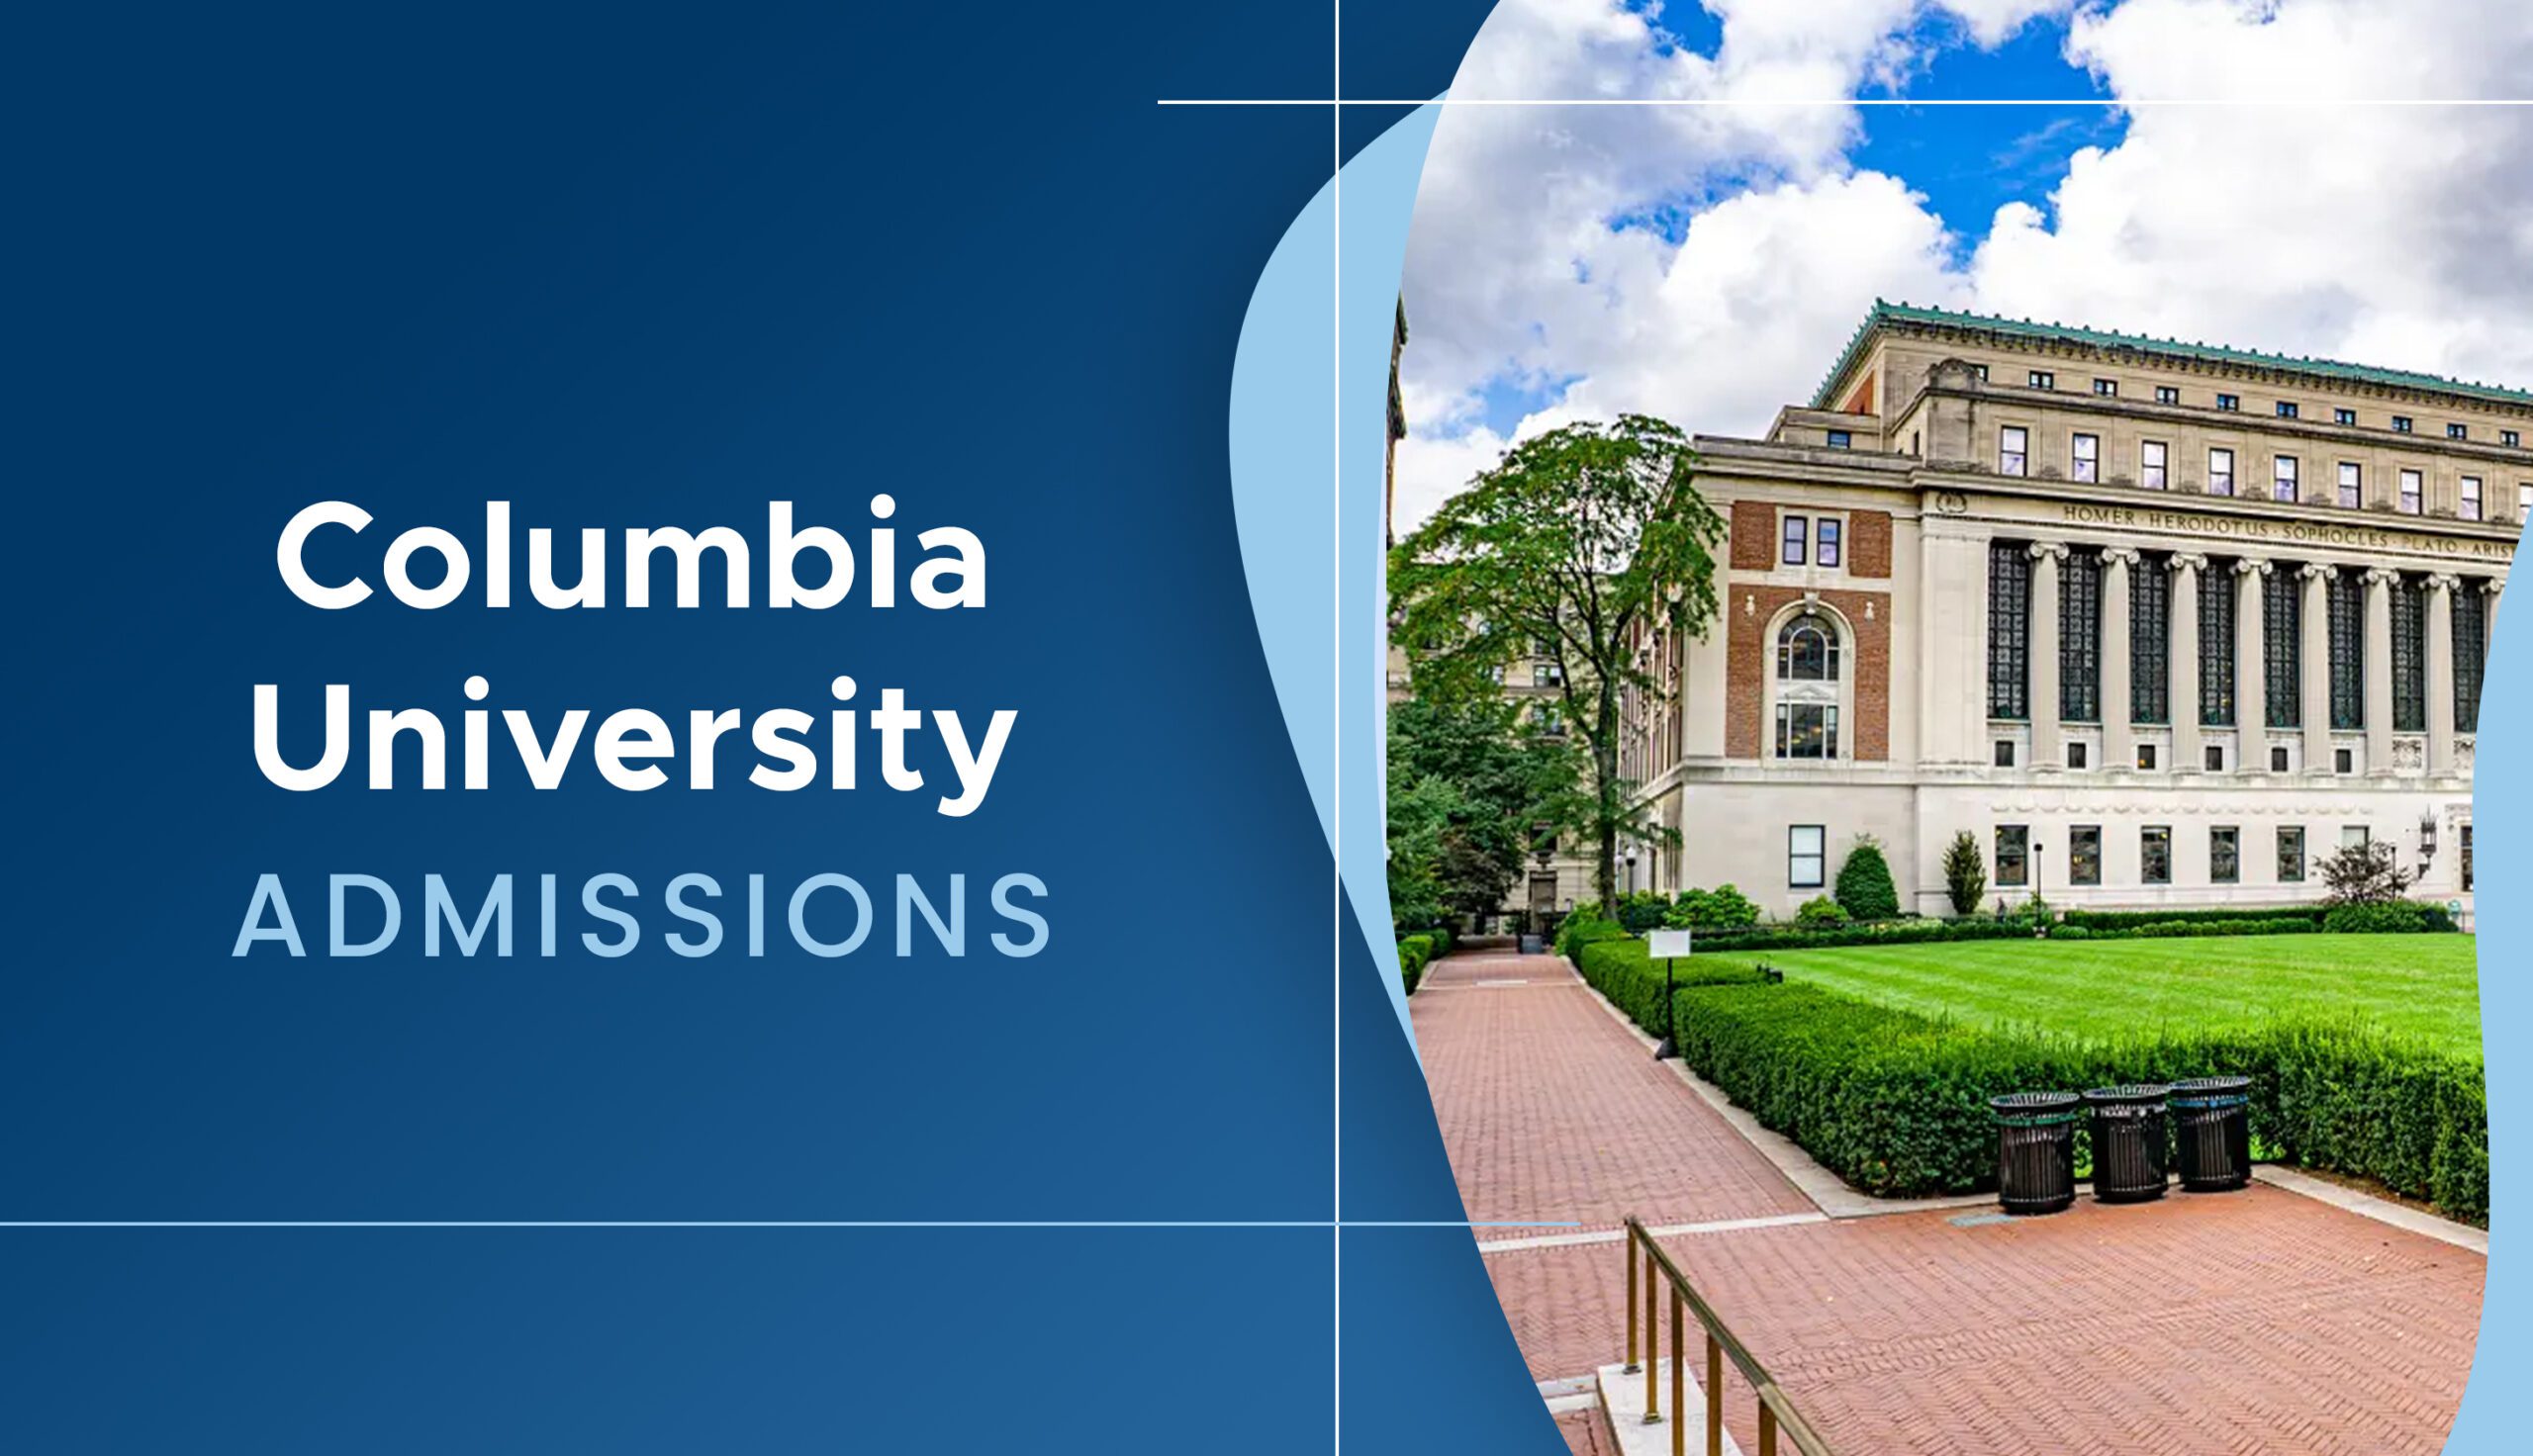 Columbia University Admissions Thumb Scaled 